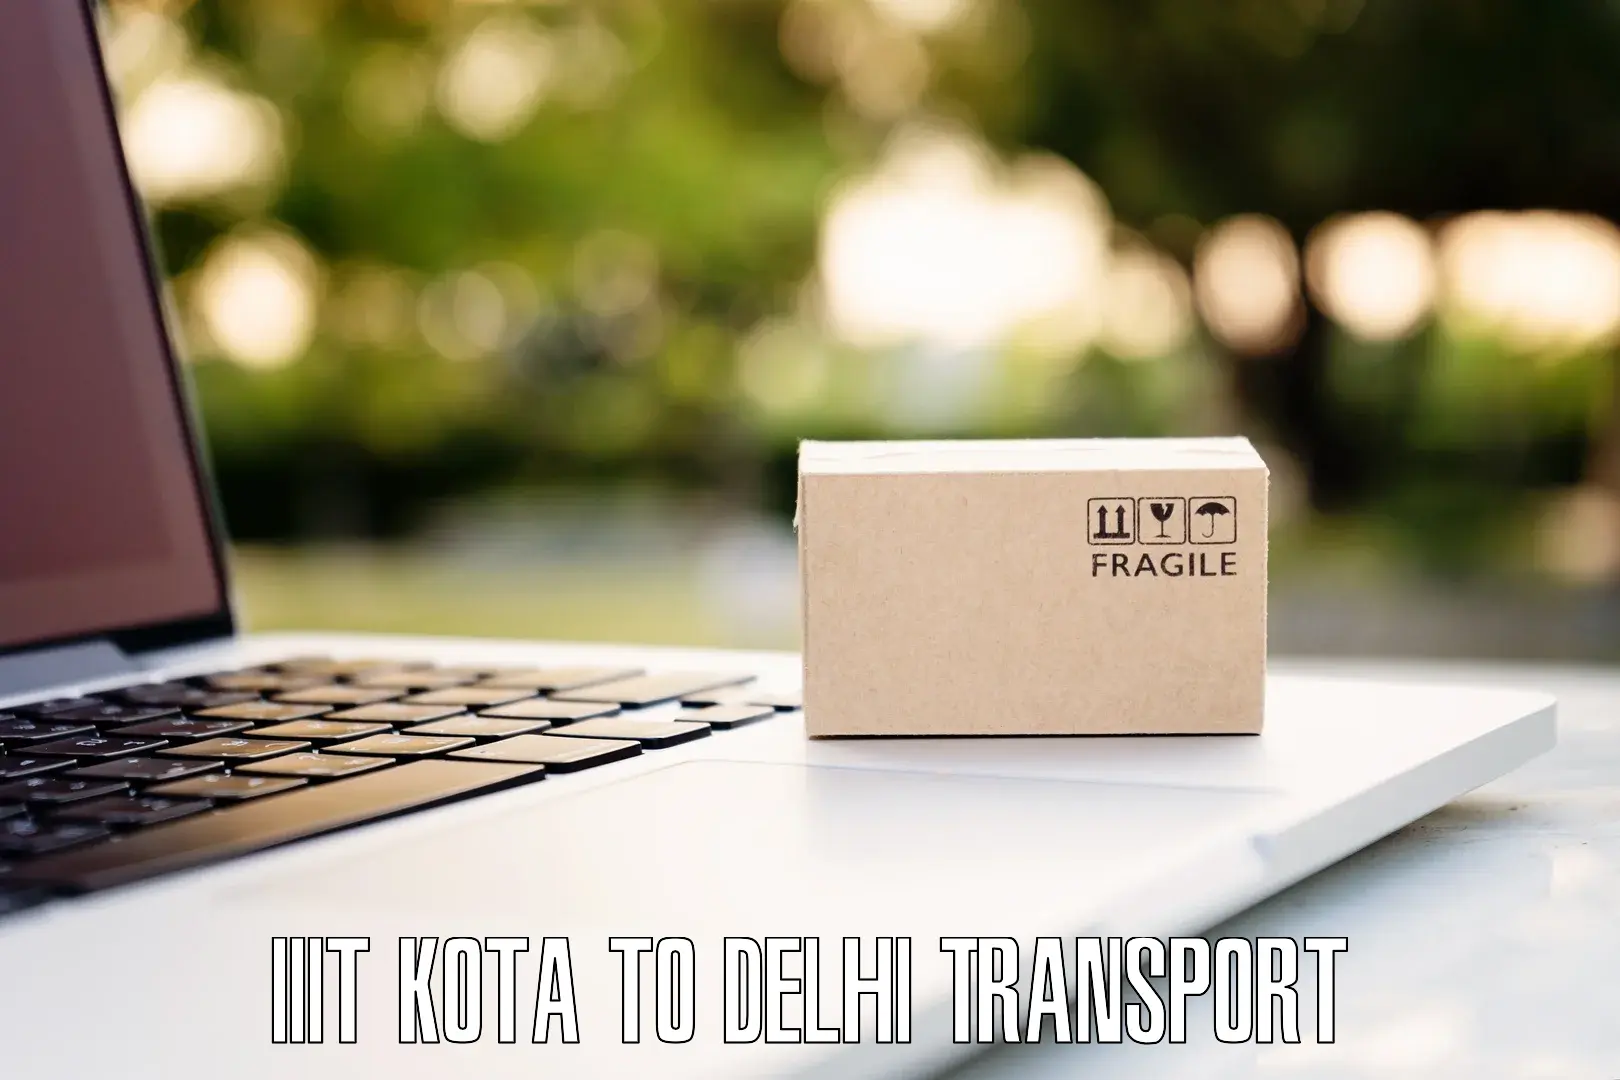 Shipping partner IIIT Kota to Indraprastha